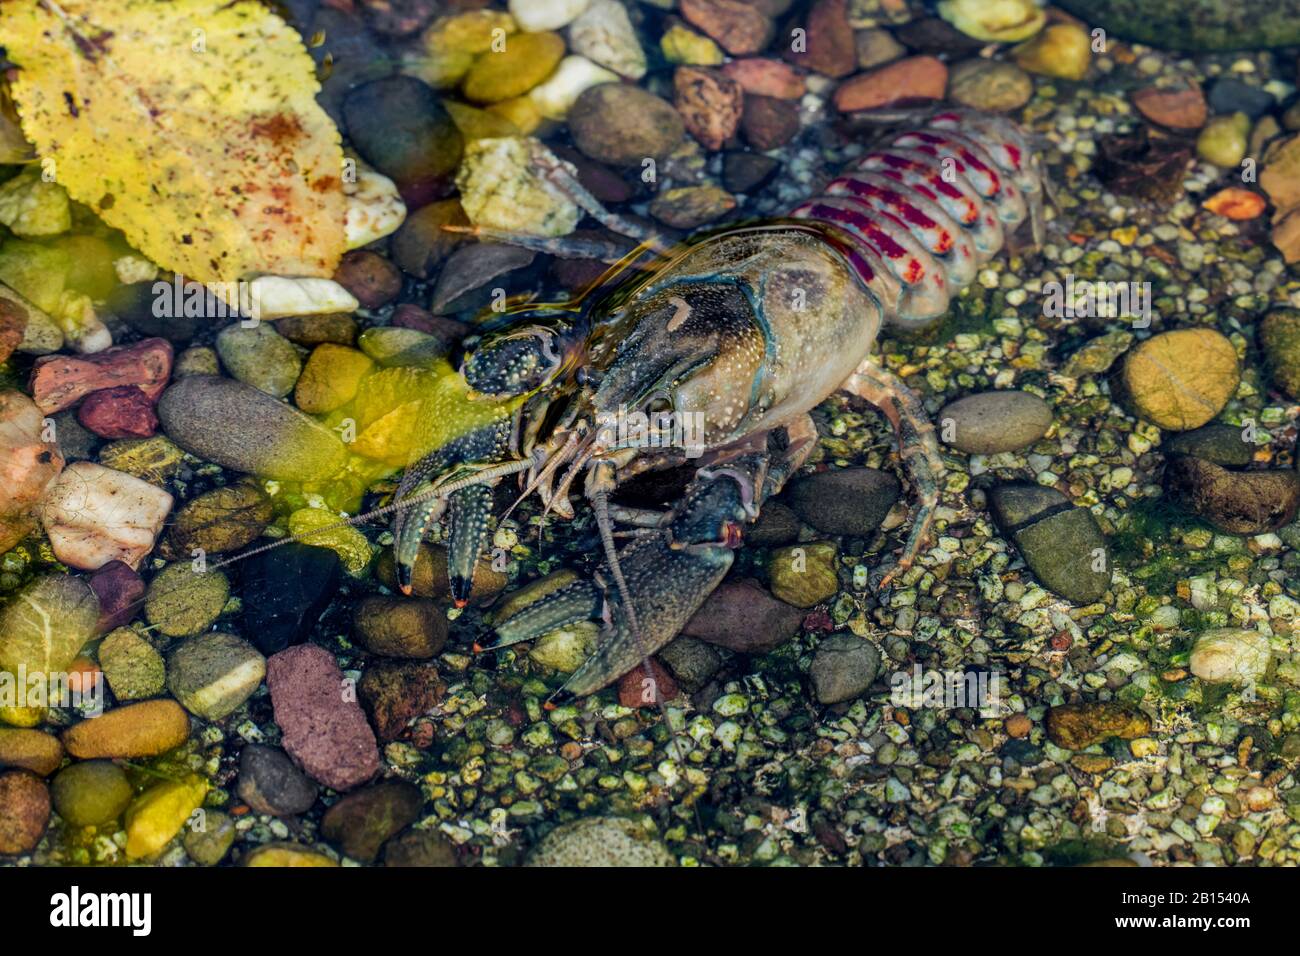 Spinycheek crayfish, American crayfish, American river crayfish, Striped crayfish (Orconectes limosus, Cambarus affinis), on the ground, Germany, Mecklenburg-Western Pomerania Stock Photo